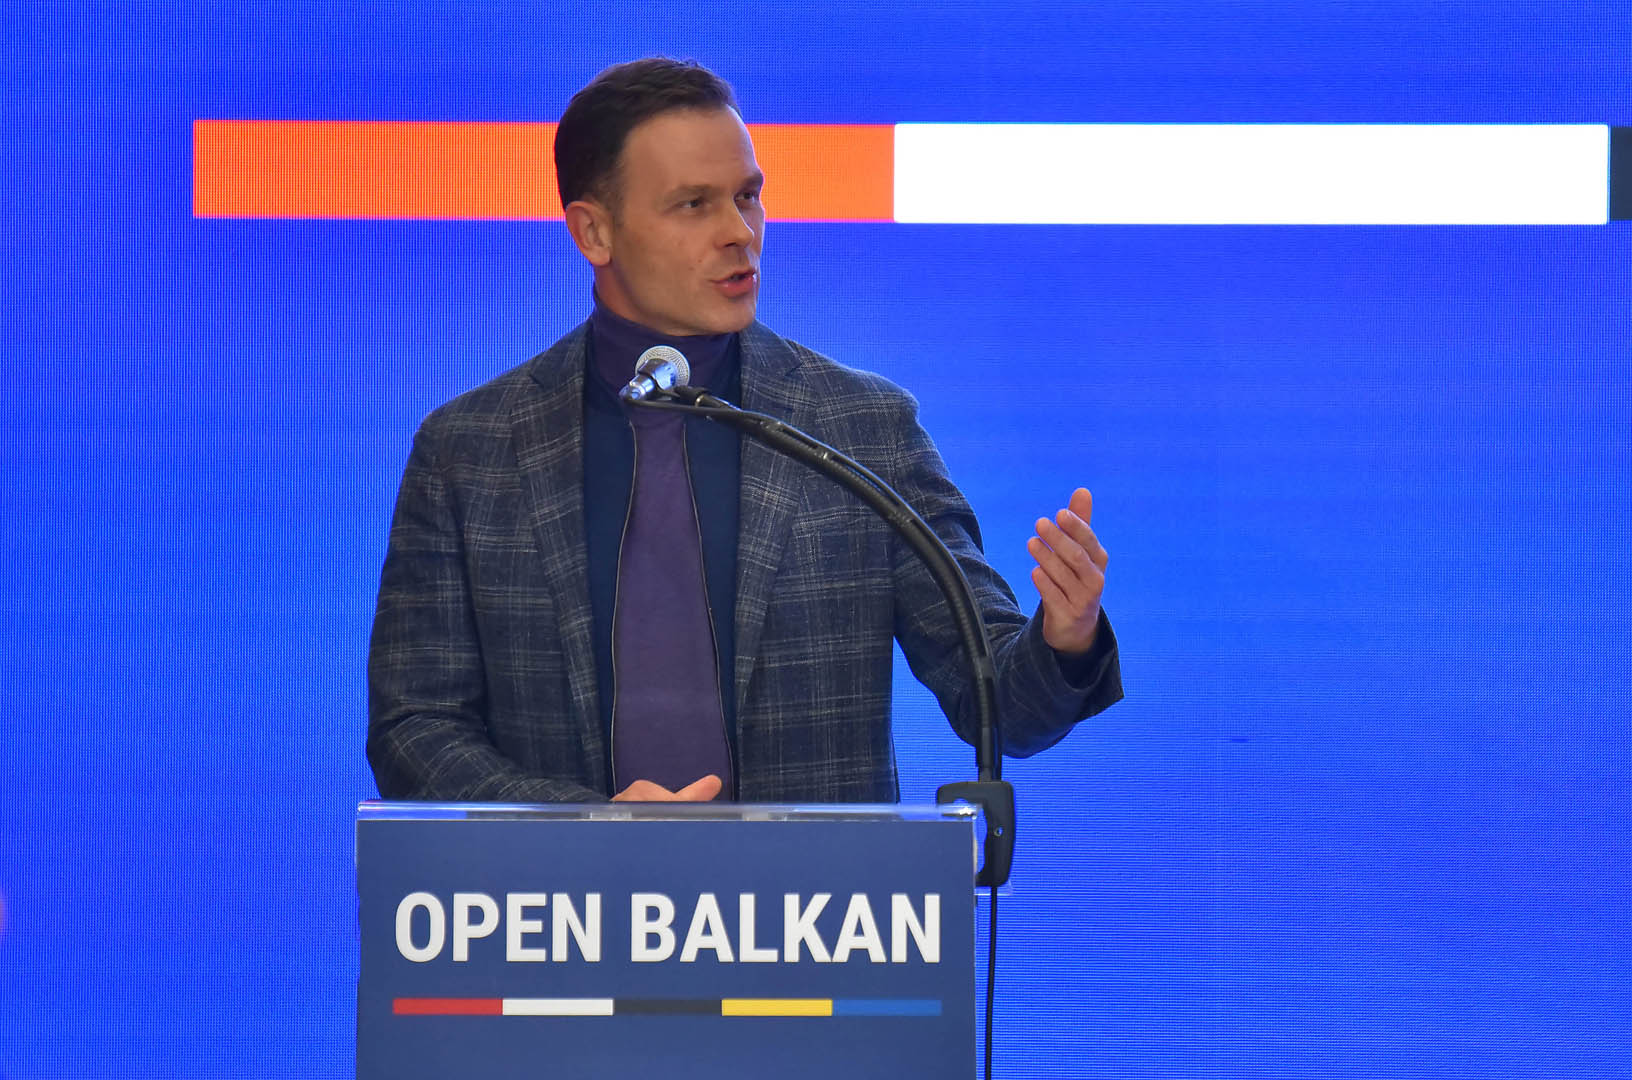 Ministar finansija Siniša Mali otvorio skup posvećen inicijativi “Otvoreni Balkan”